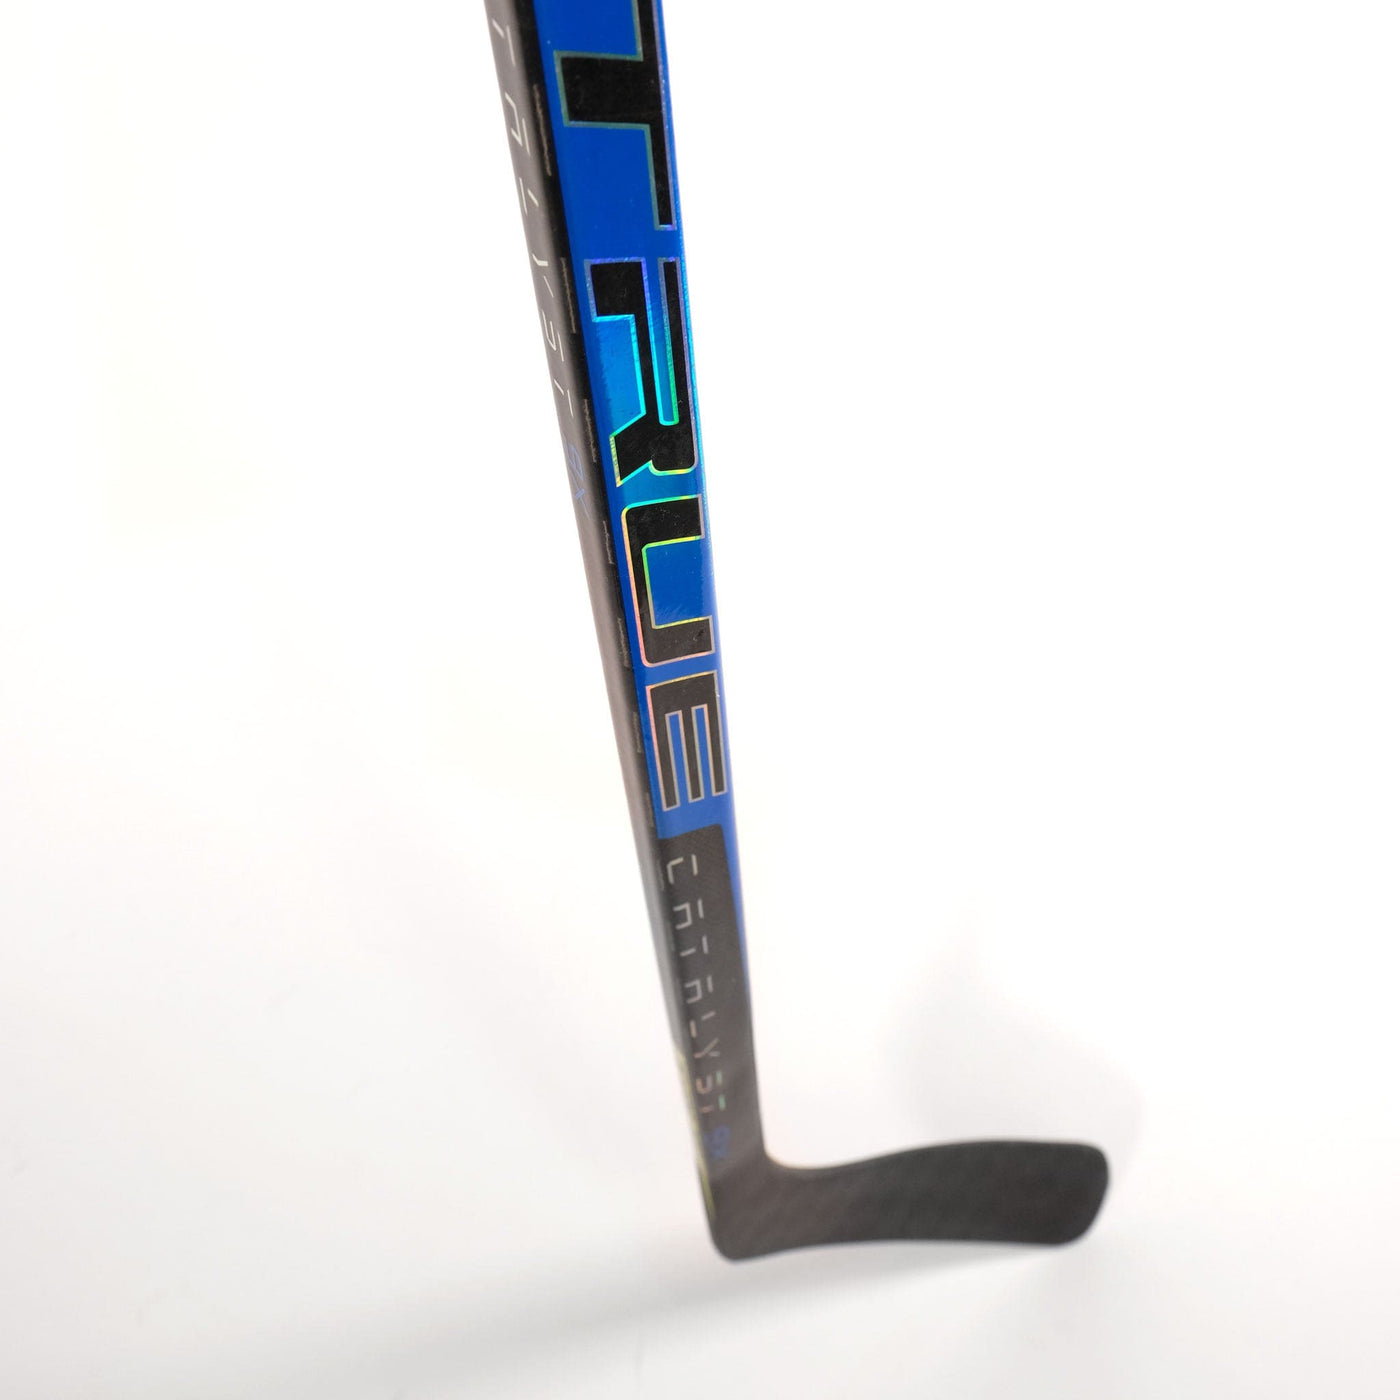 TRUE Catalyst 9X Pro Stock Senior Hockey Stick - Ryan Poehling - TC2 - L-85 - The Hockey Shop Source For Sports